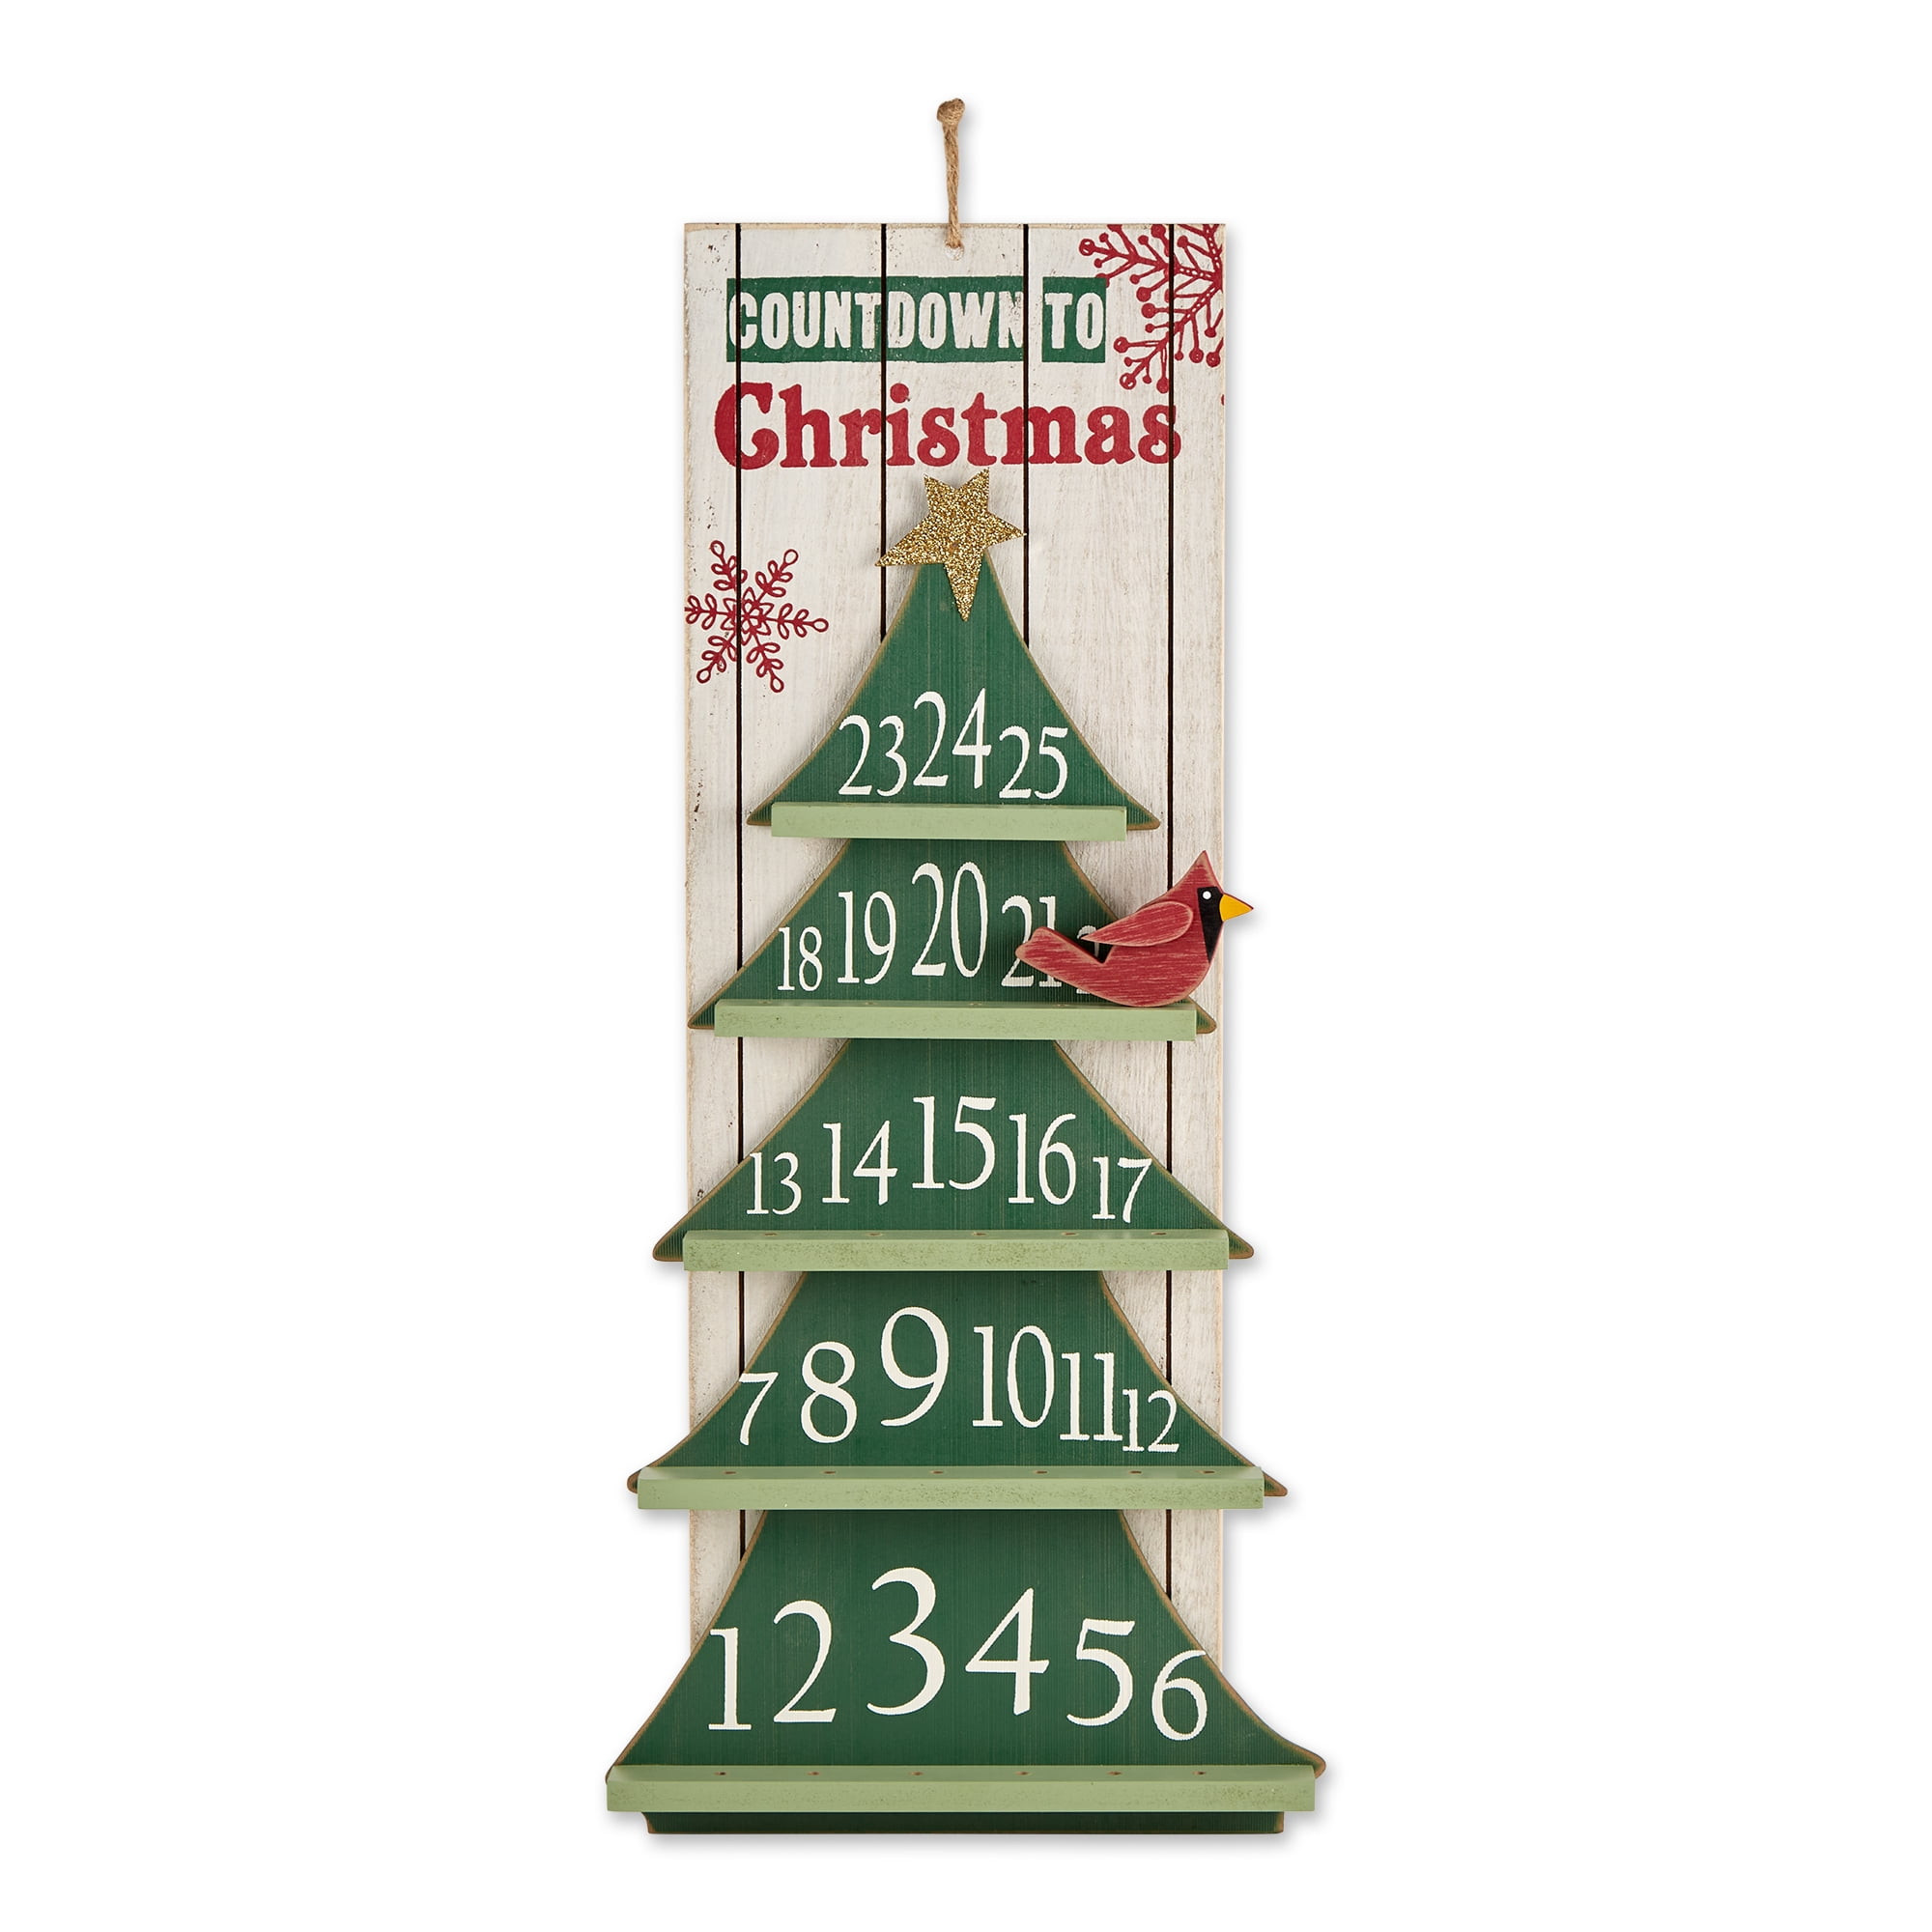 Countdown To Christmas Tree Calendar Wall Sign - image 1 of 3